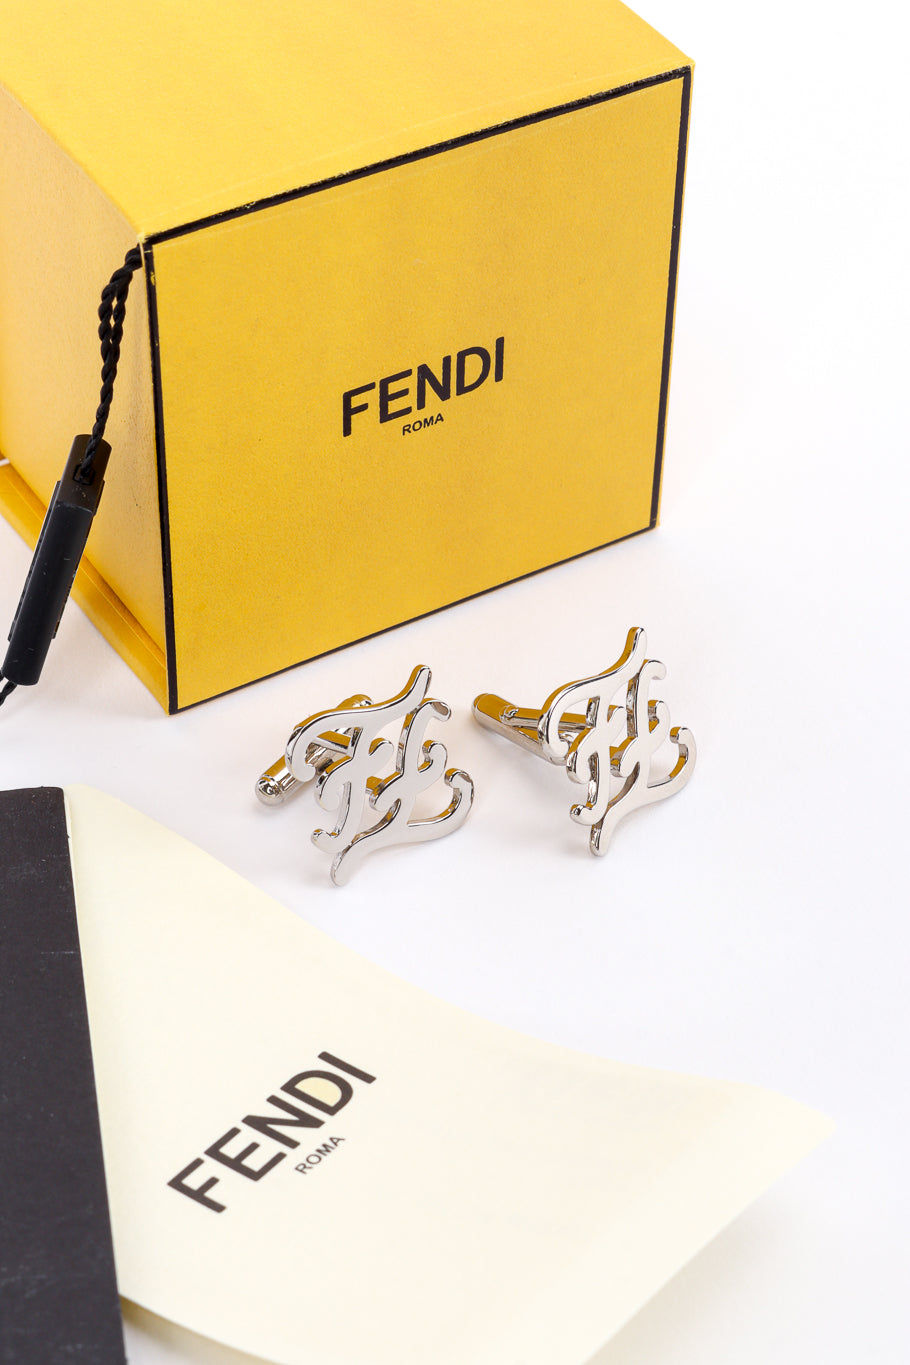 Fendi Karligraphy Logo Cufflinks with box @recessla